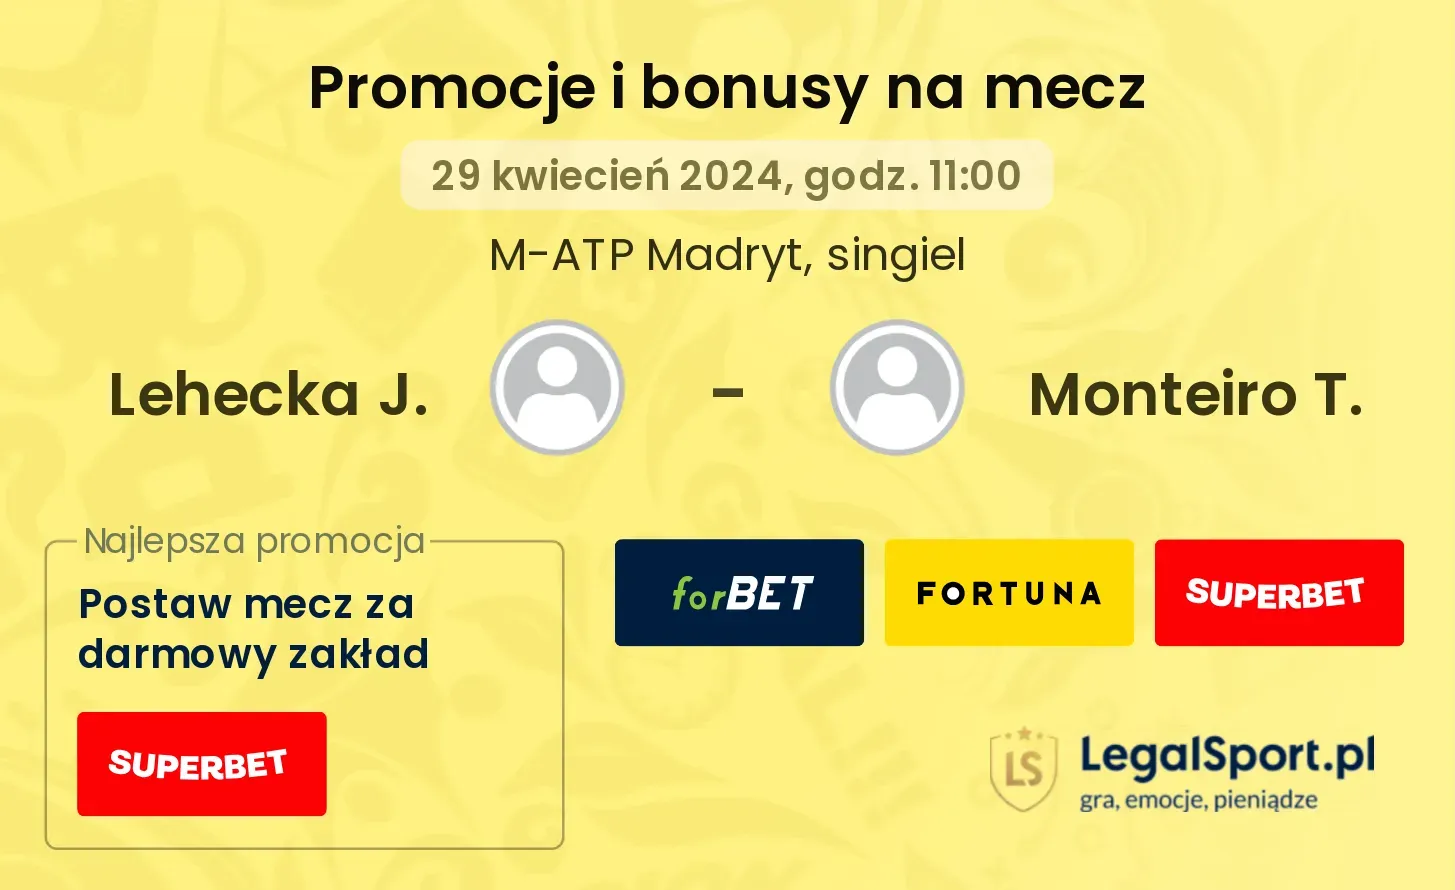 Lehecka J. - Monteiro T. promocje bonusy na mecz